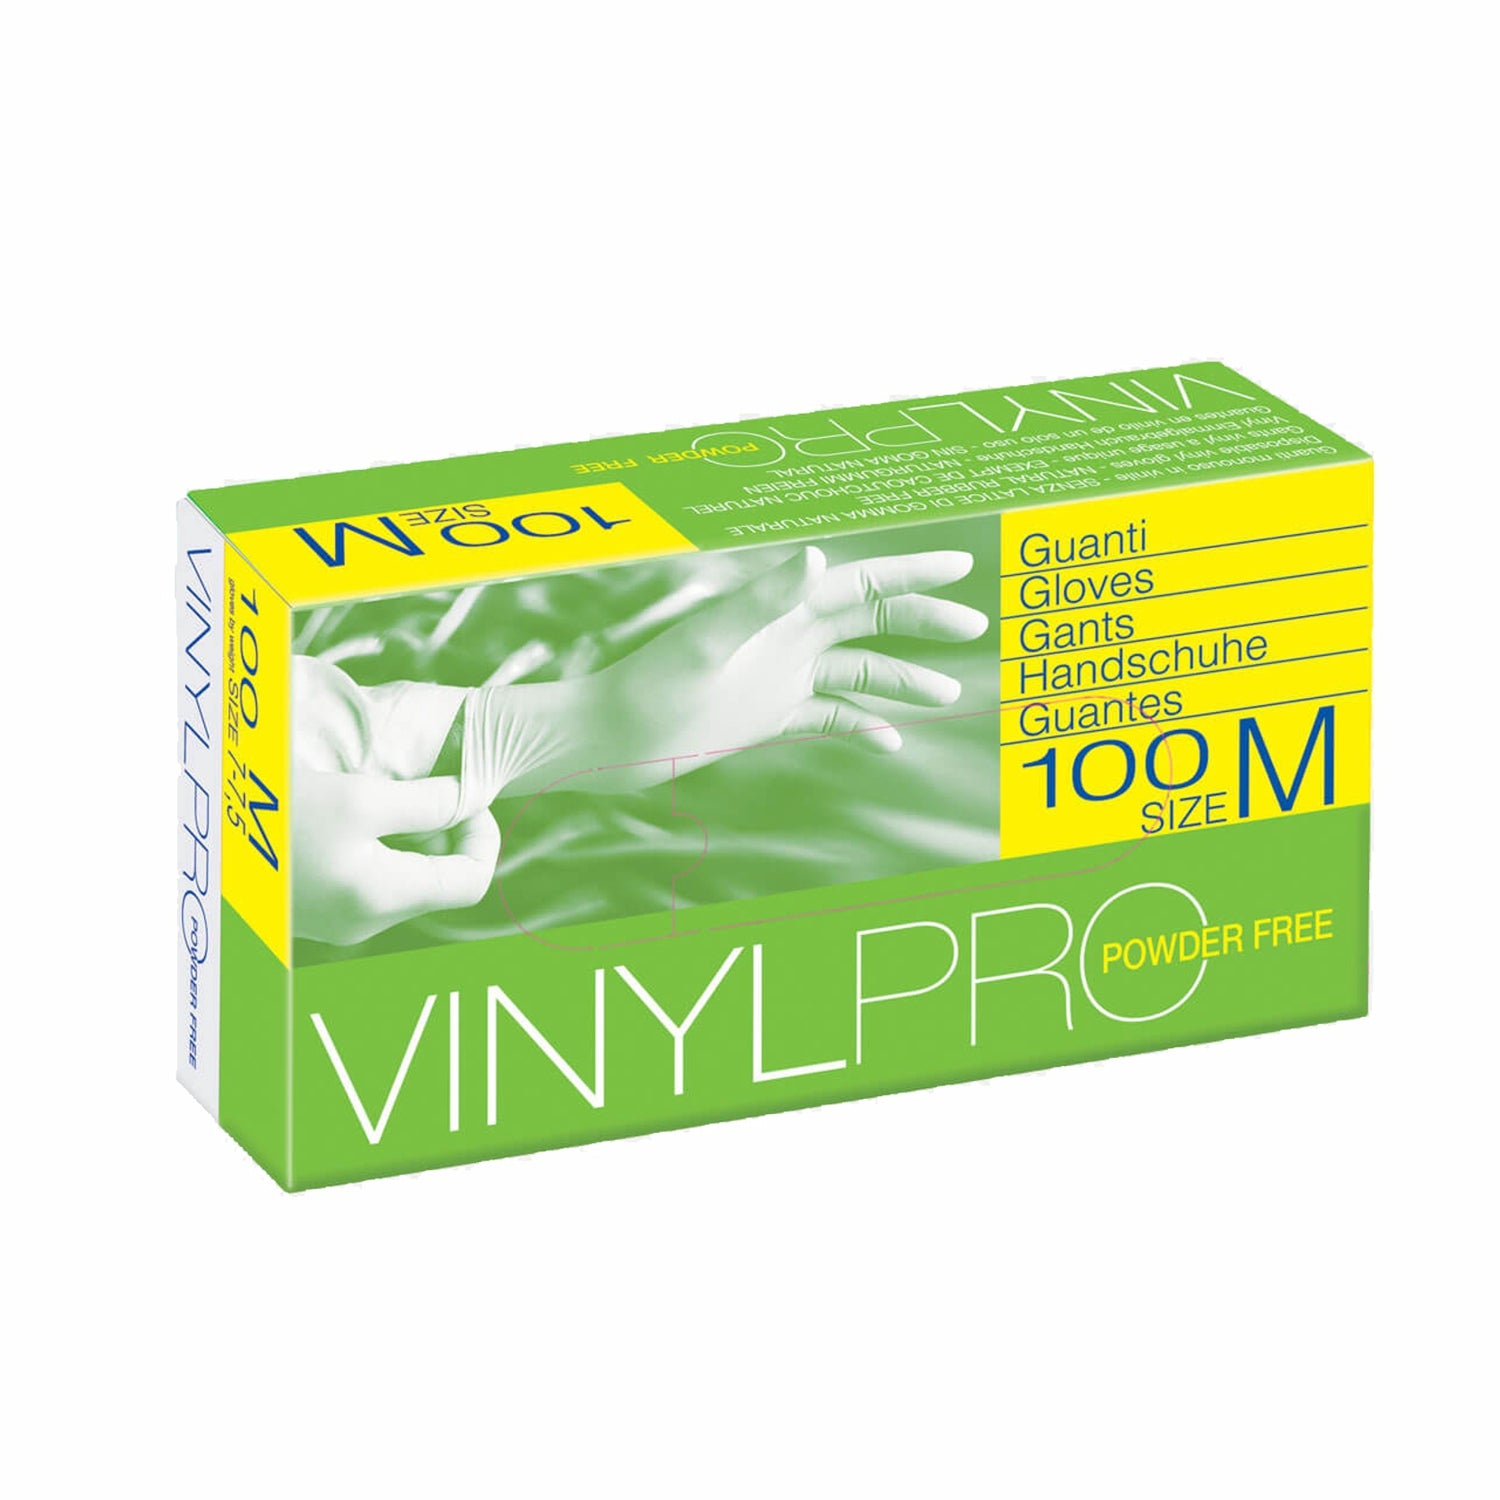 Vinyl pro Powder free guanti in vinile icoguanti